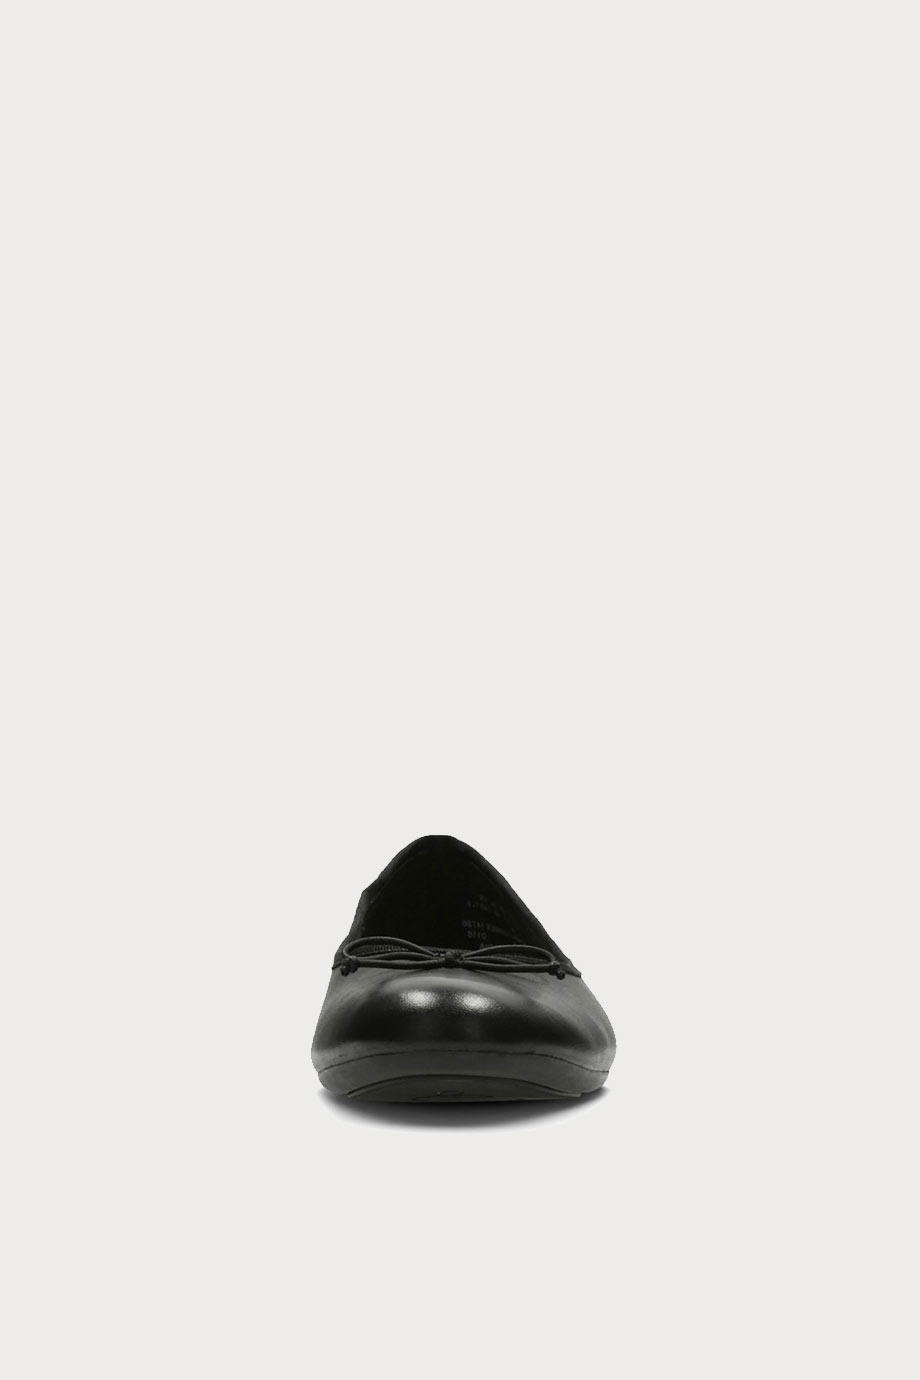 spiridoula metheniti shoes xalkida p Couture Bloom clarks black leather 3